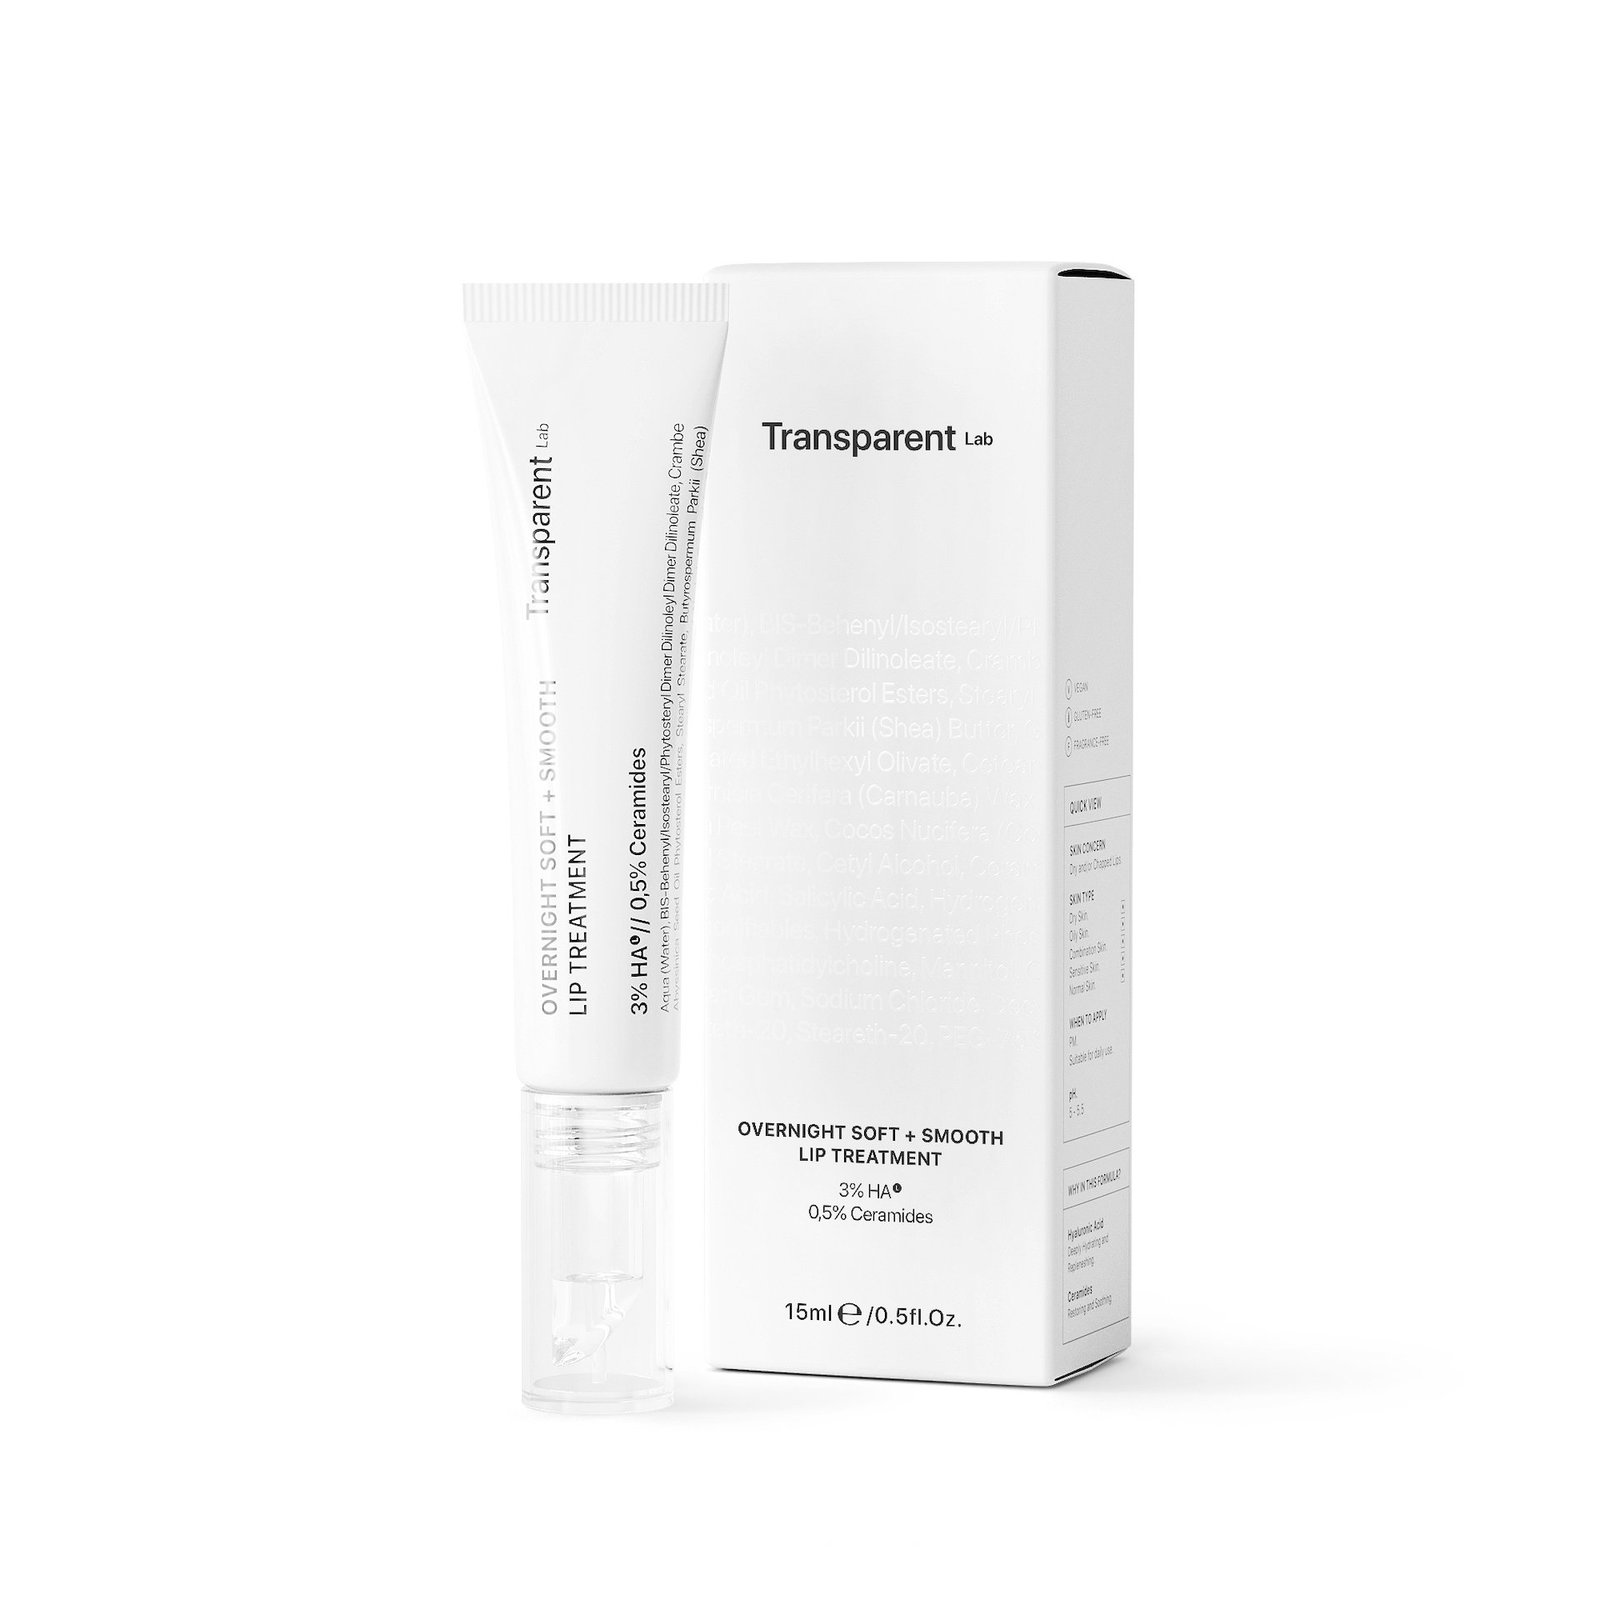 Niche Beauty Lab Transparent Overnight Soft + Smooth Lip Treatment 15 ml